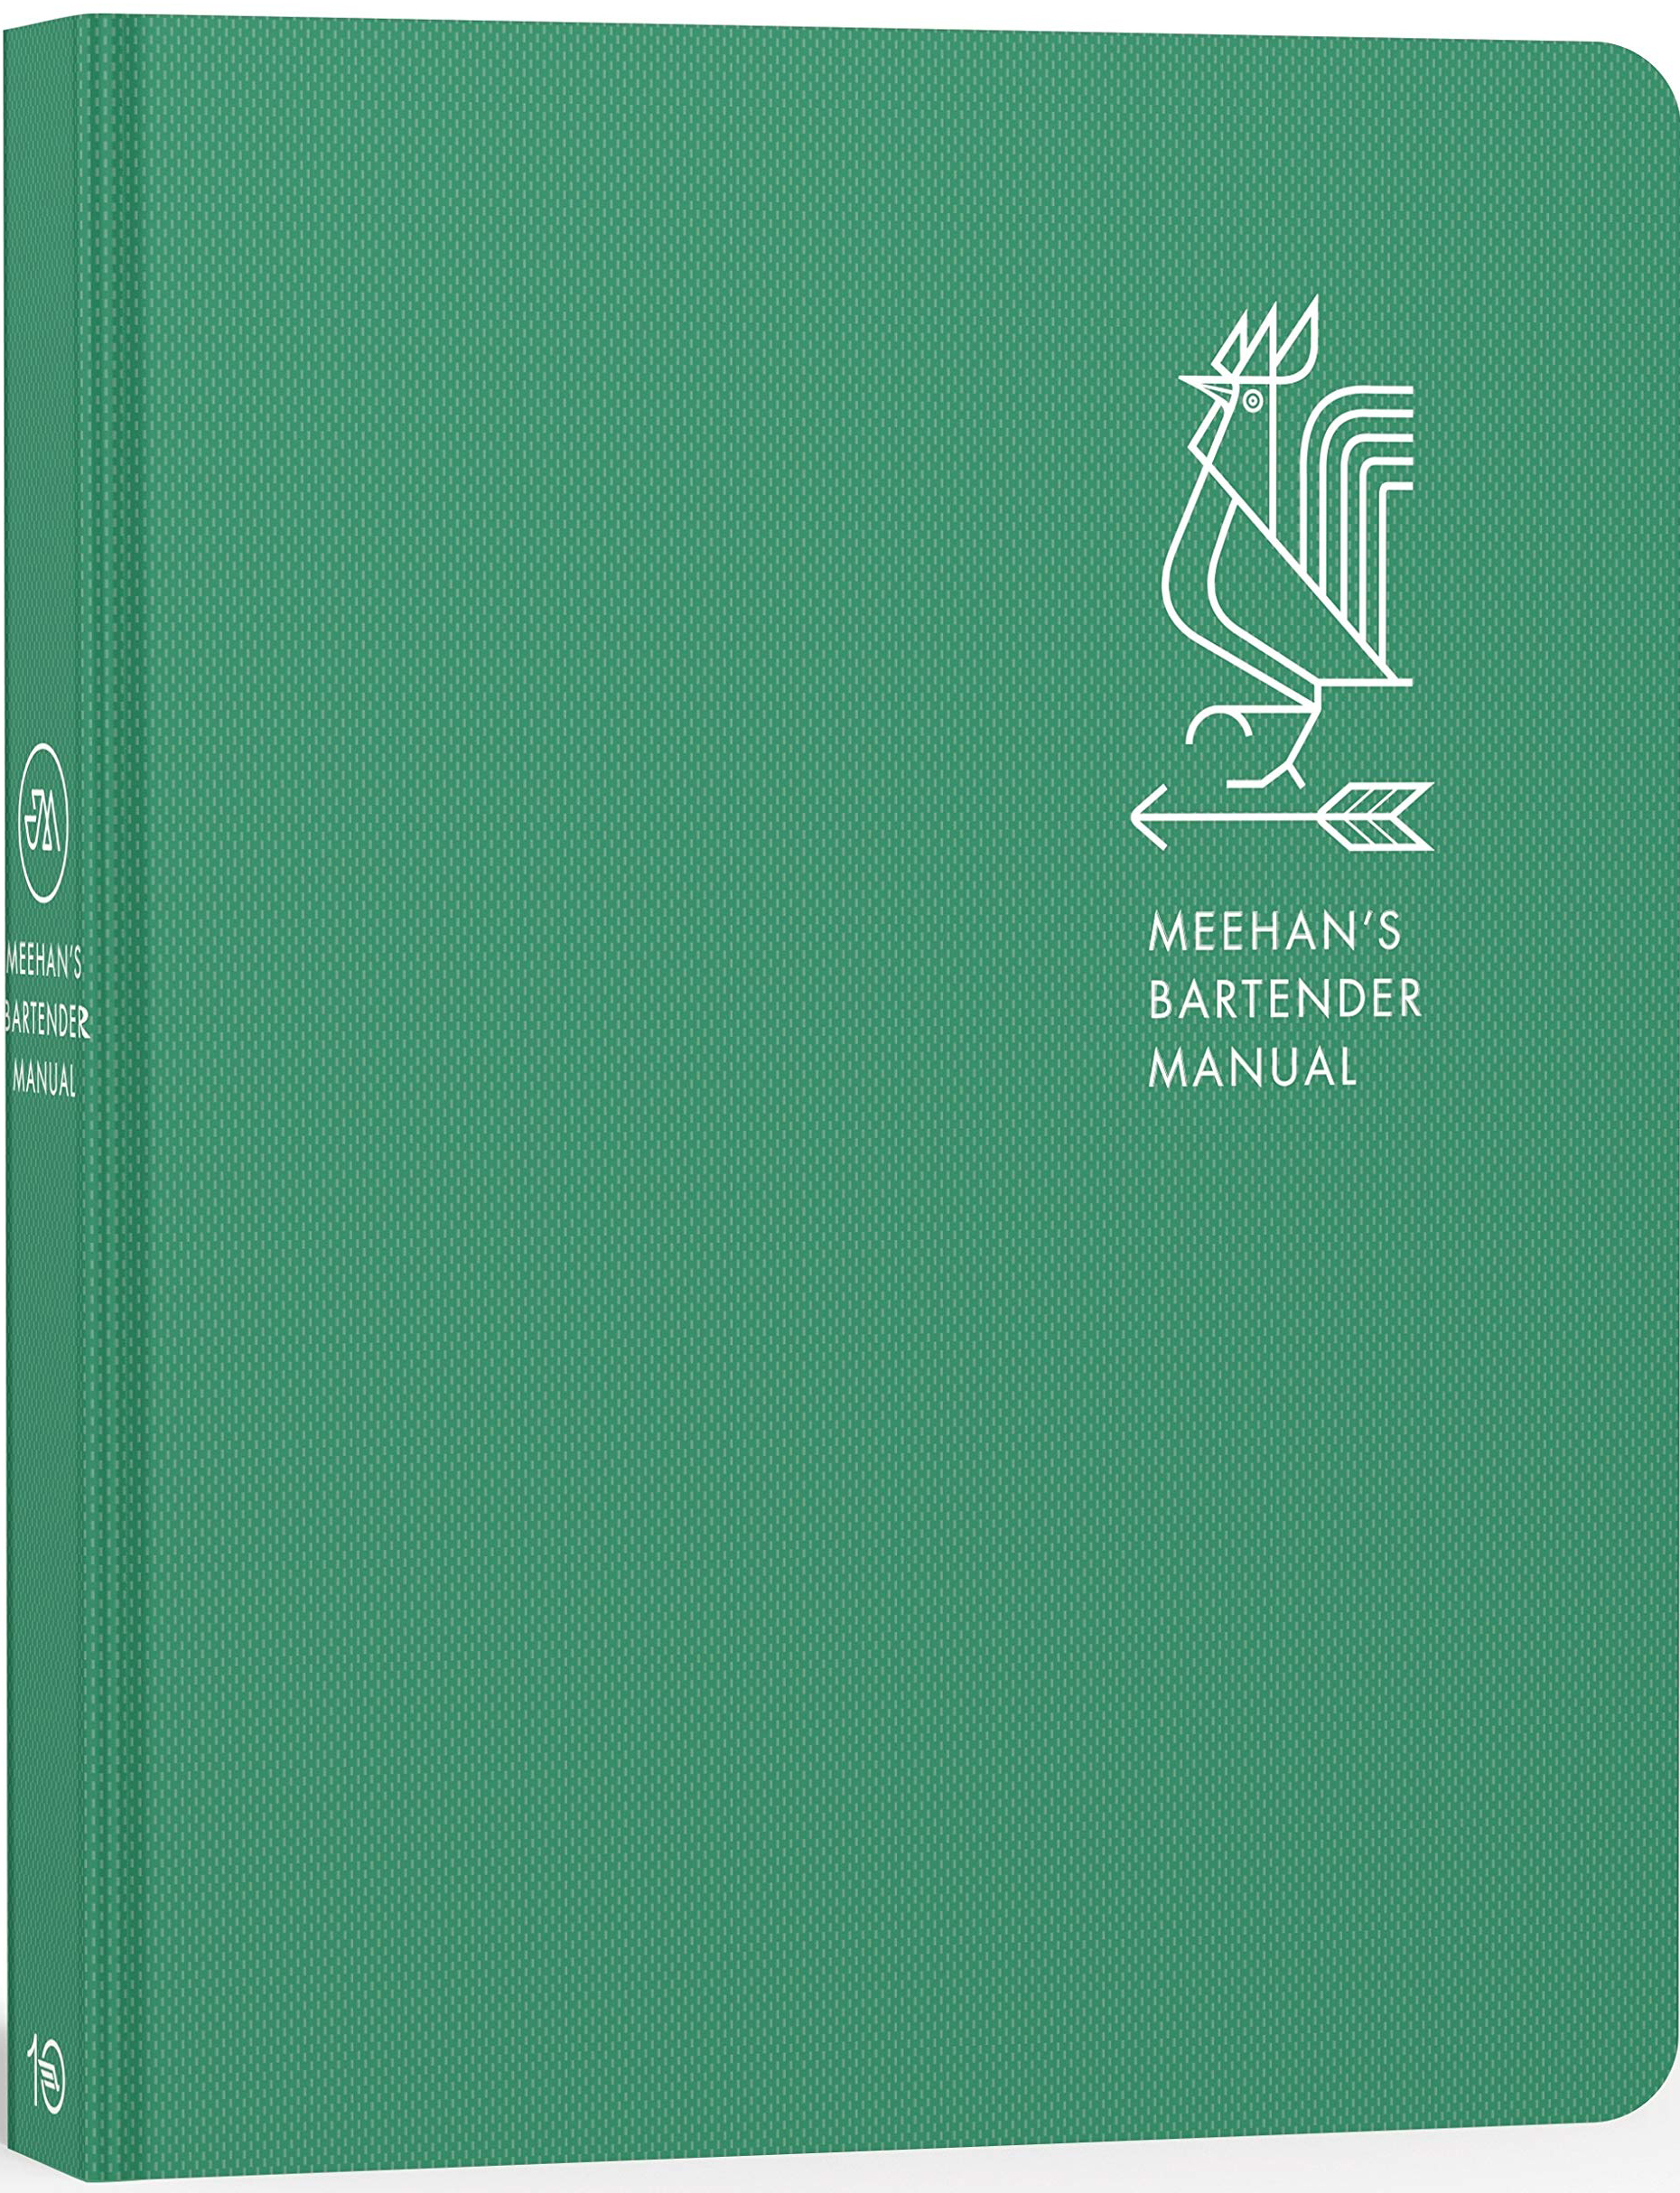 capa do livro meehan's bartender manual